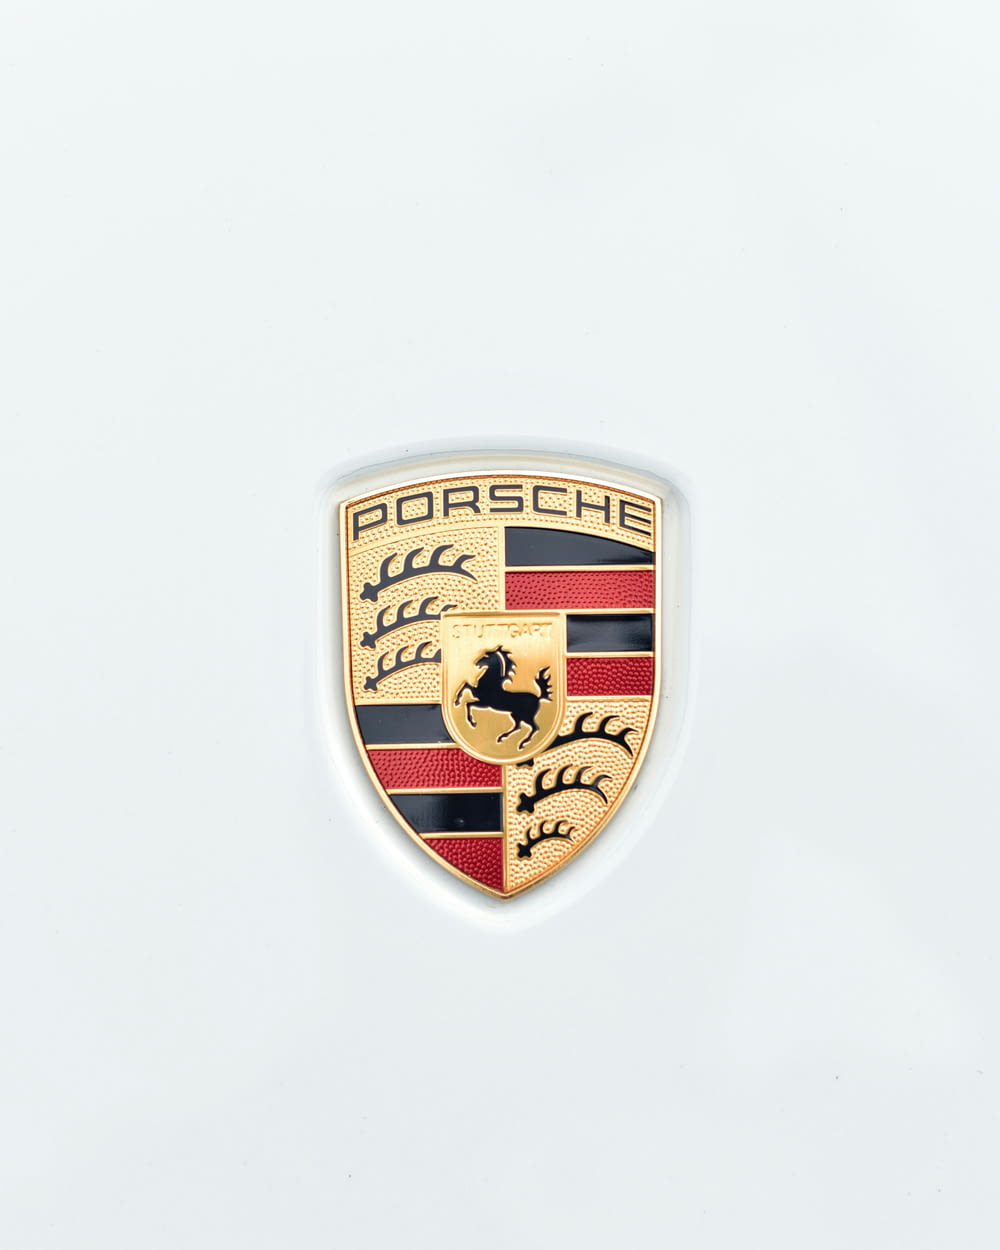 a porsche emblem on a white background